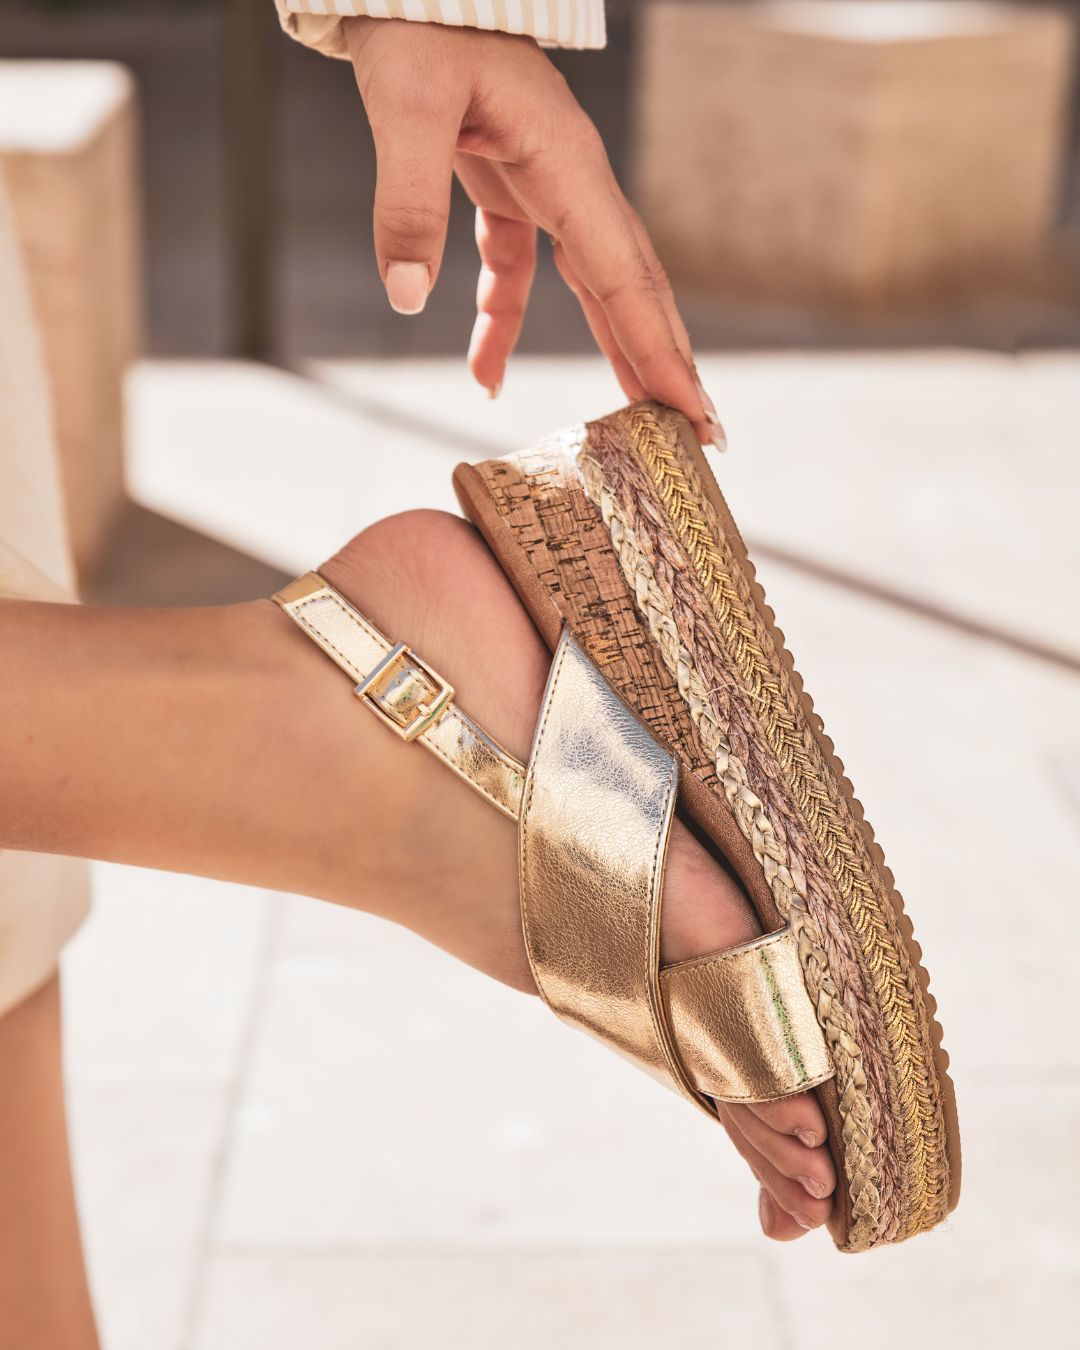 Sandale femme compensée doré - Elisa